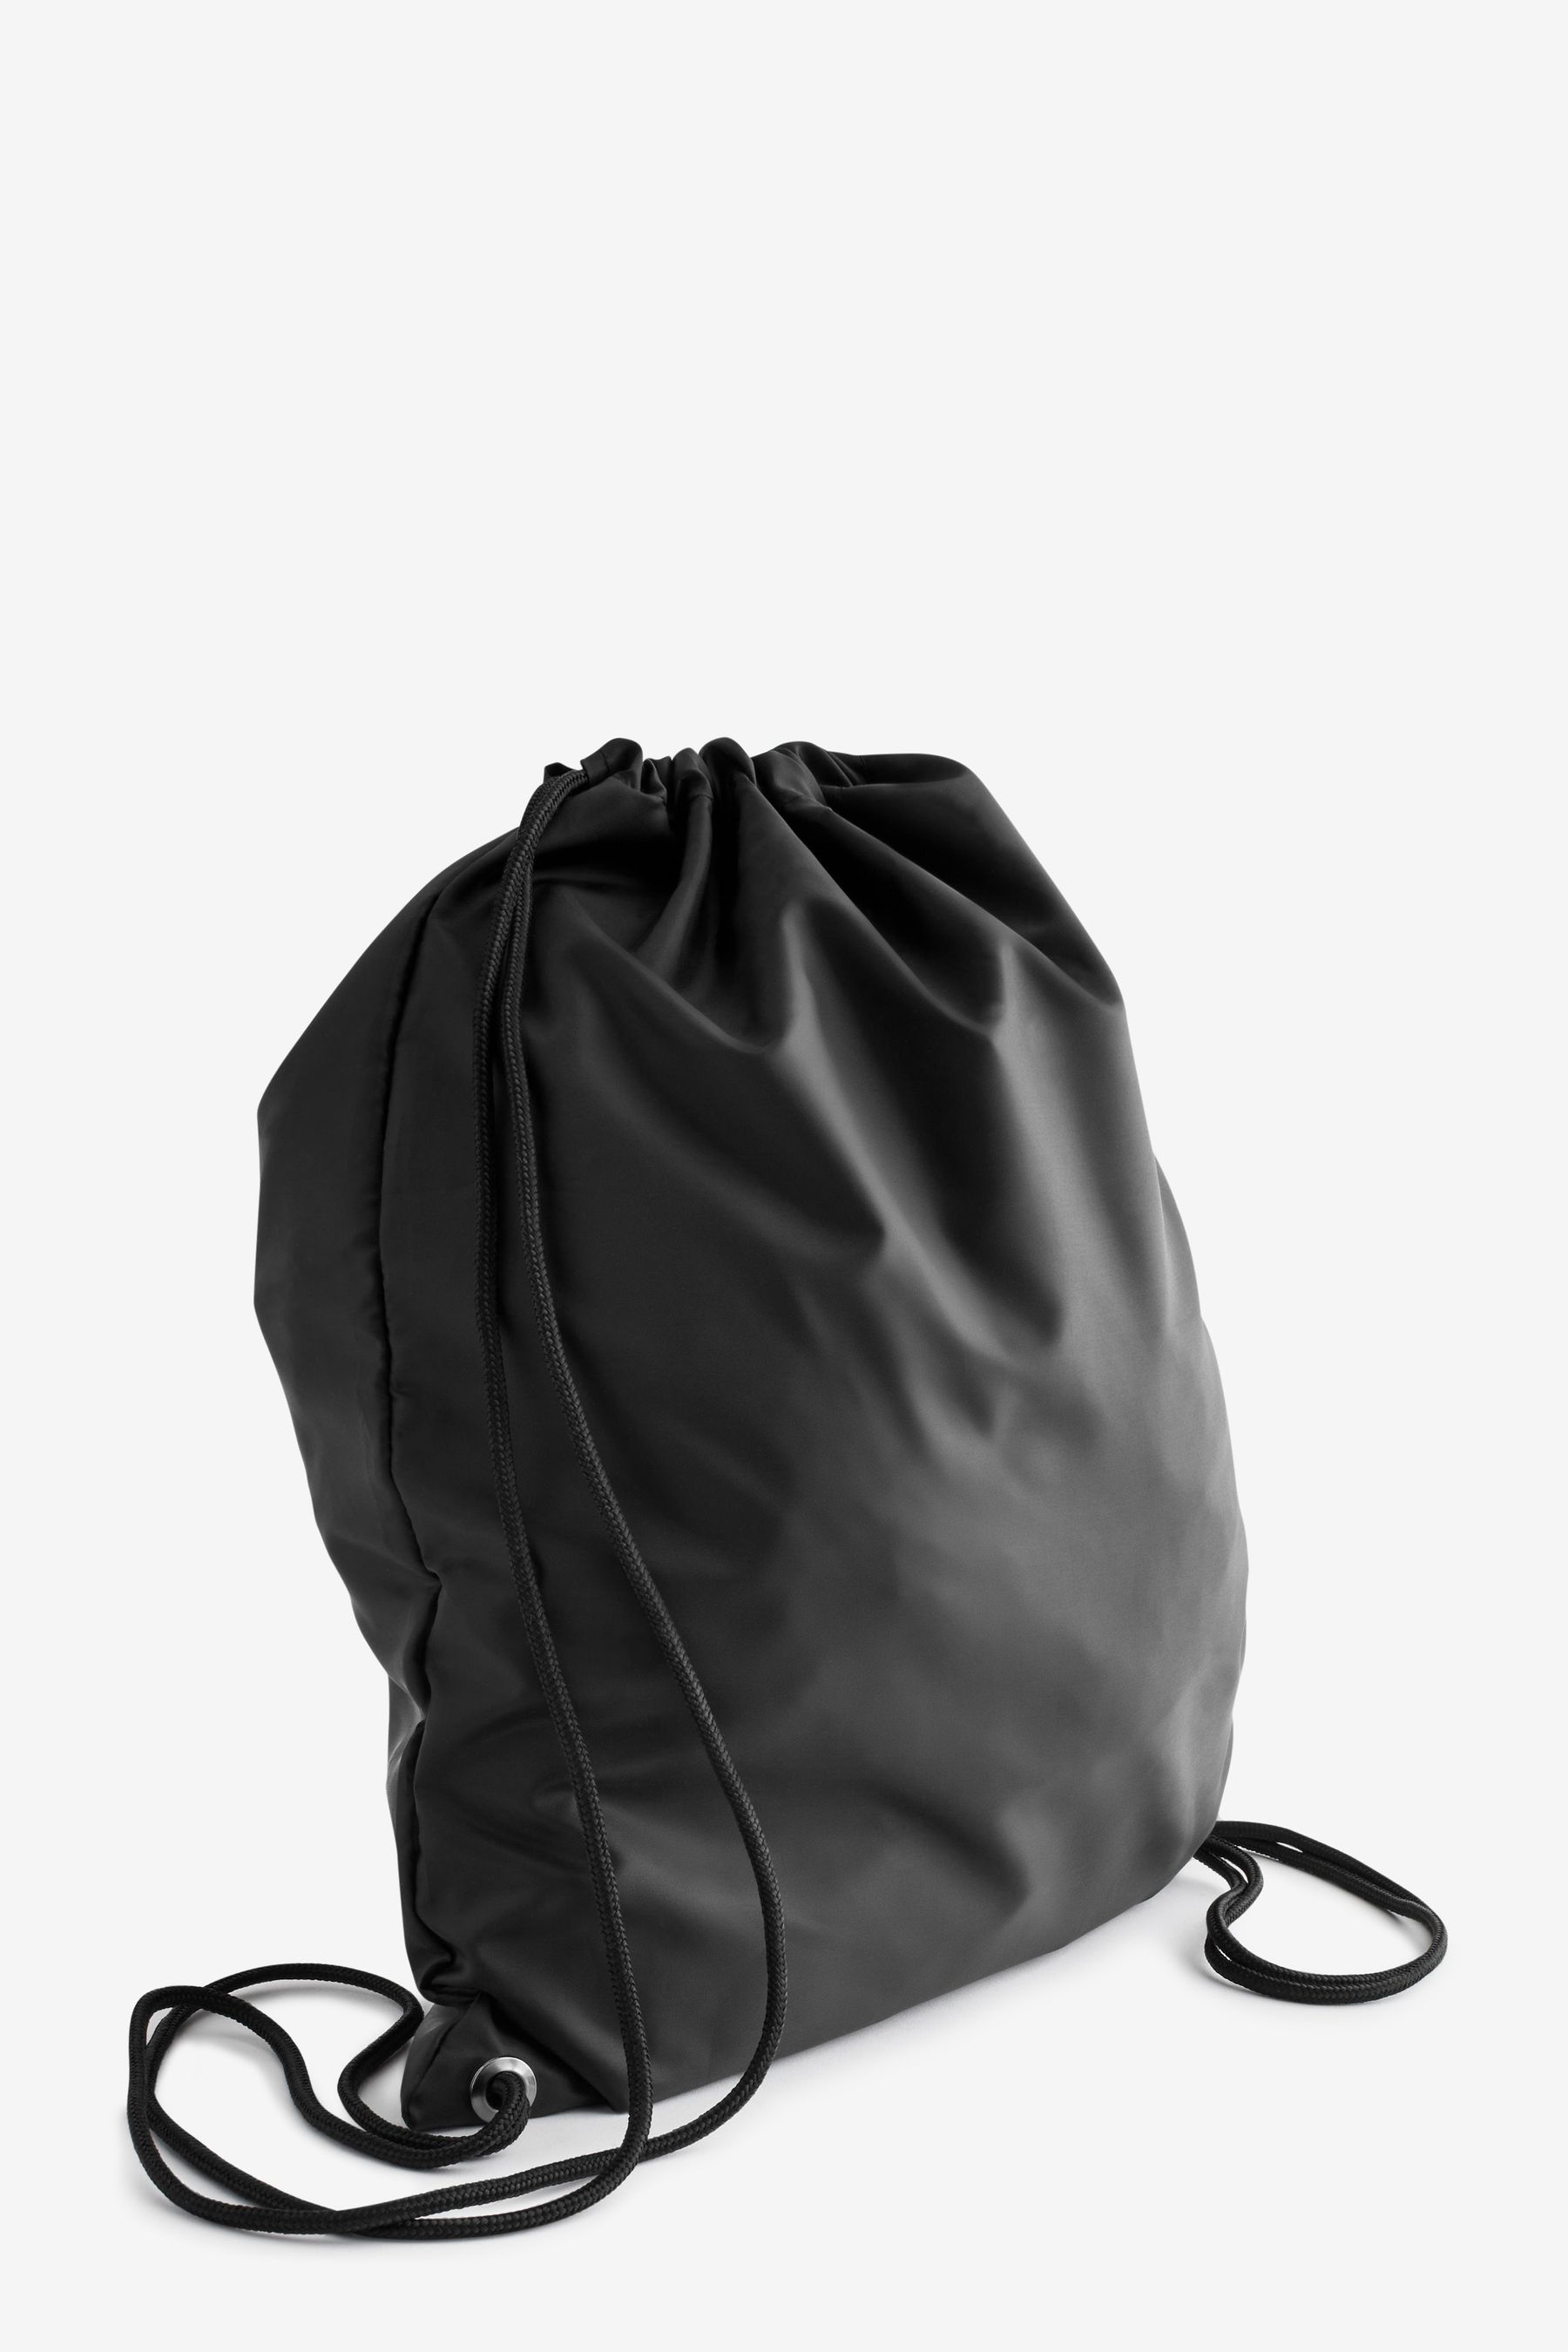 Buy Black Drawstring Gym Bag from the Next UK online shop